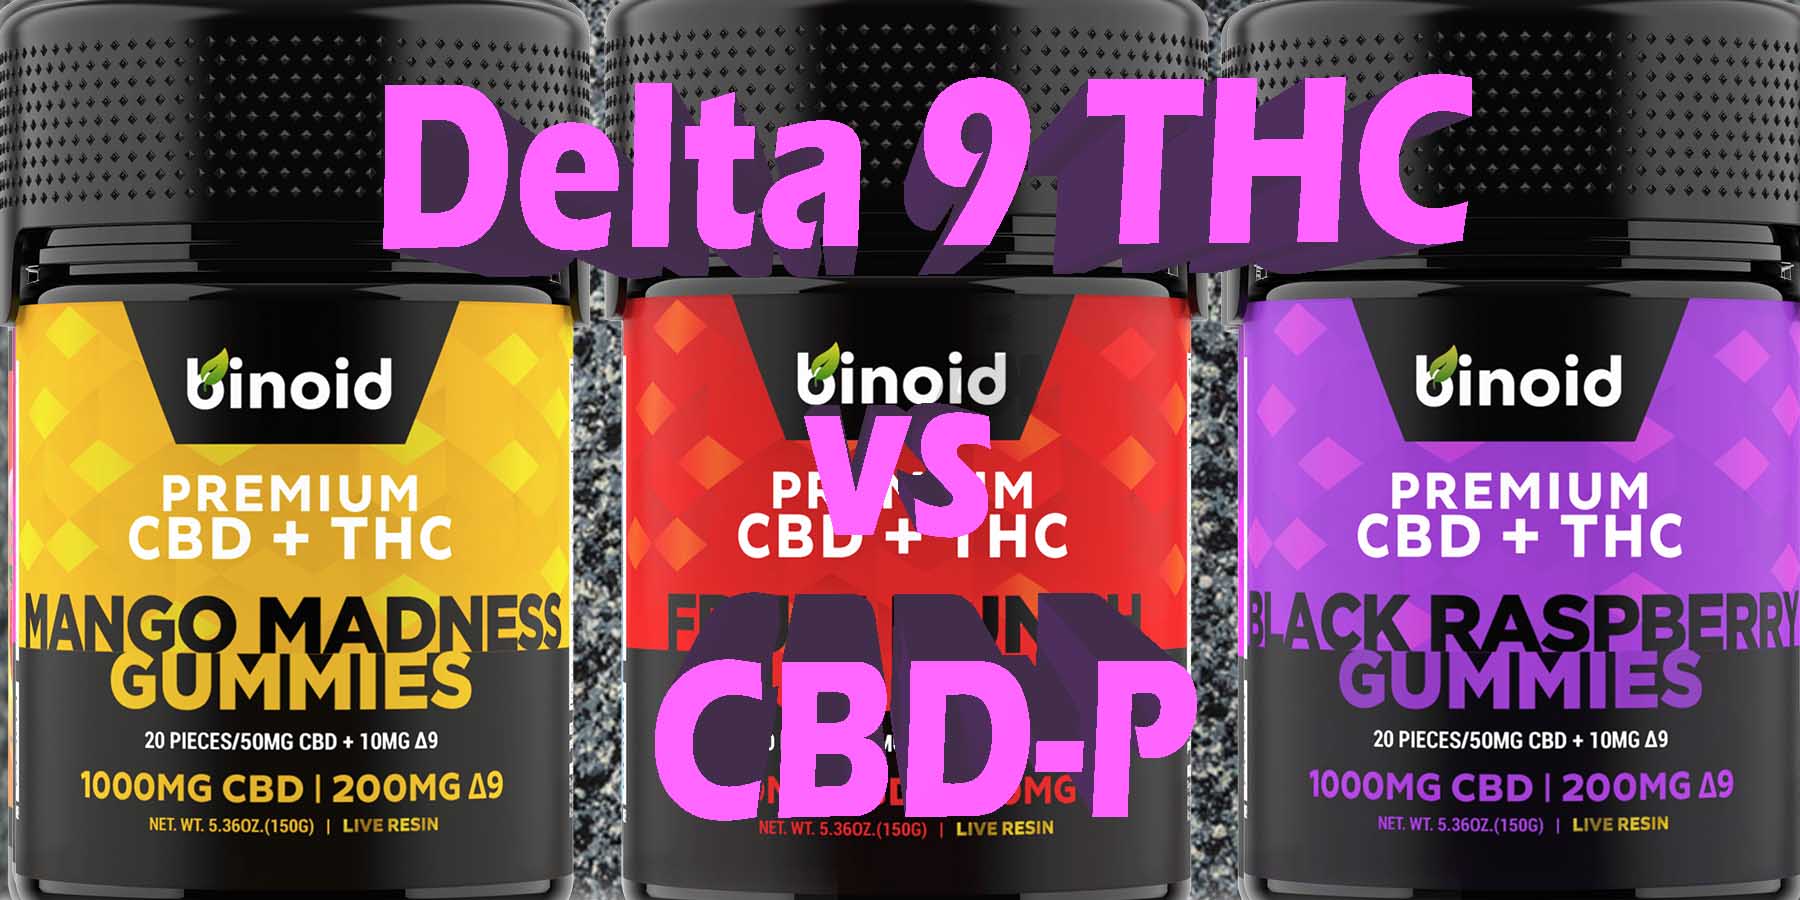 Delta 9 THC vs CBDP BestBrand GoodPrice GetNearMe LowestCoupon DiscountStore Shoponline VapeCarts Online StrongestSmoke ShopBinoid THC